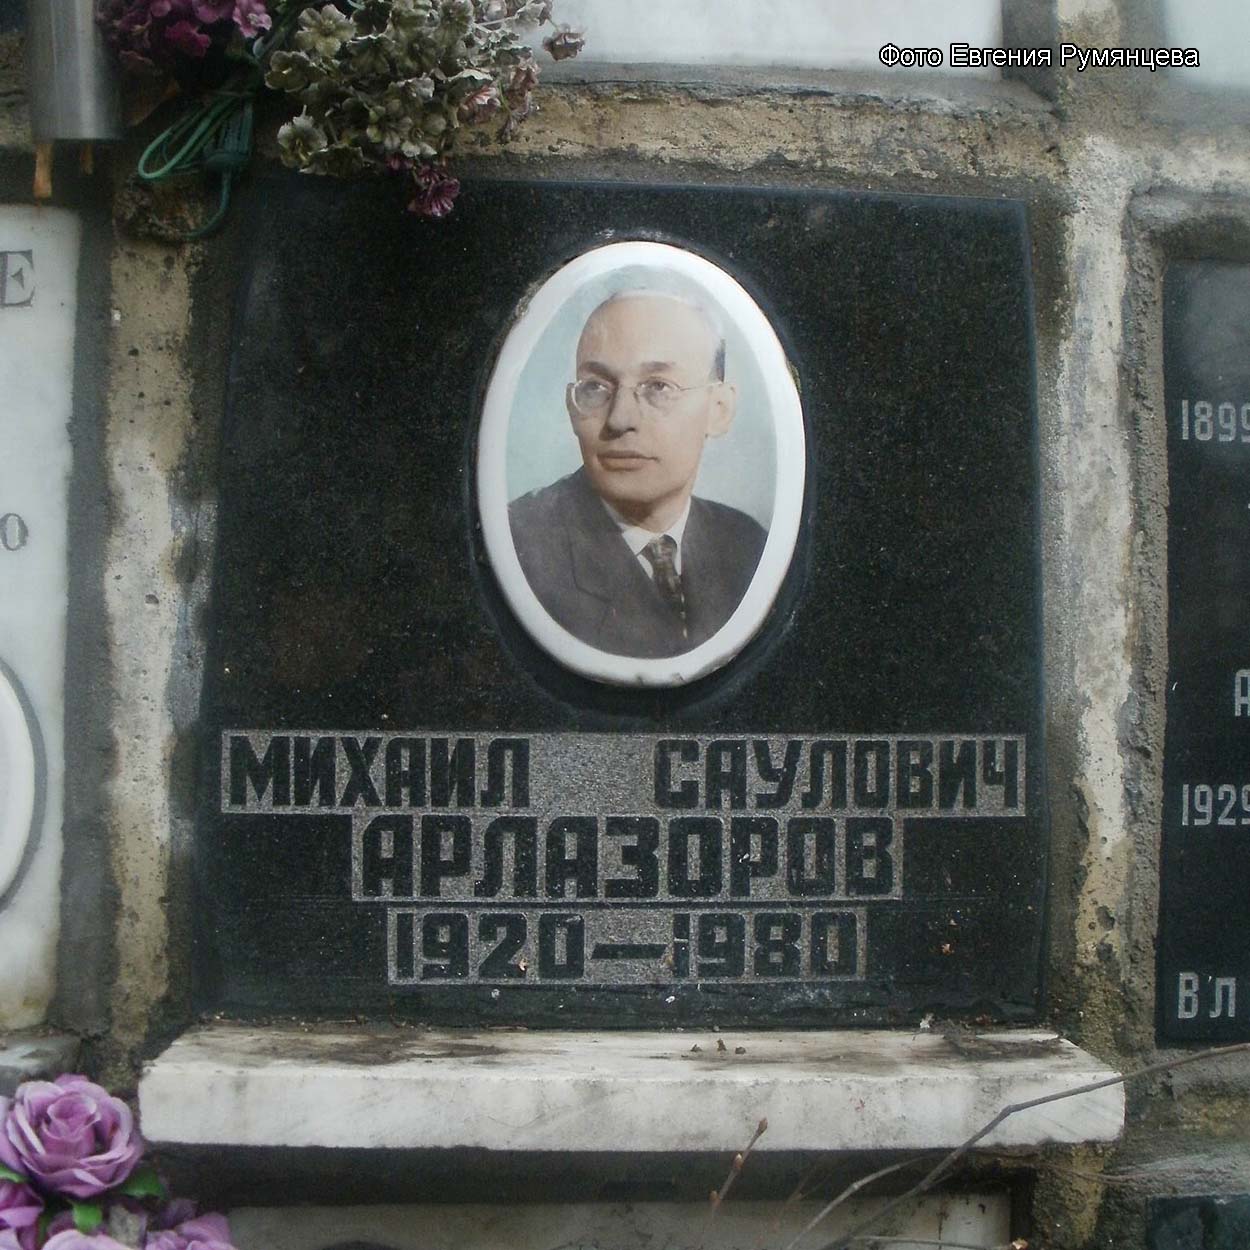 Михаил Саулович Арлазоров